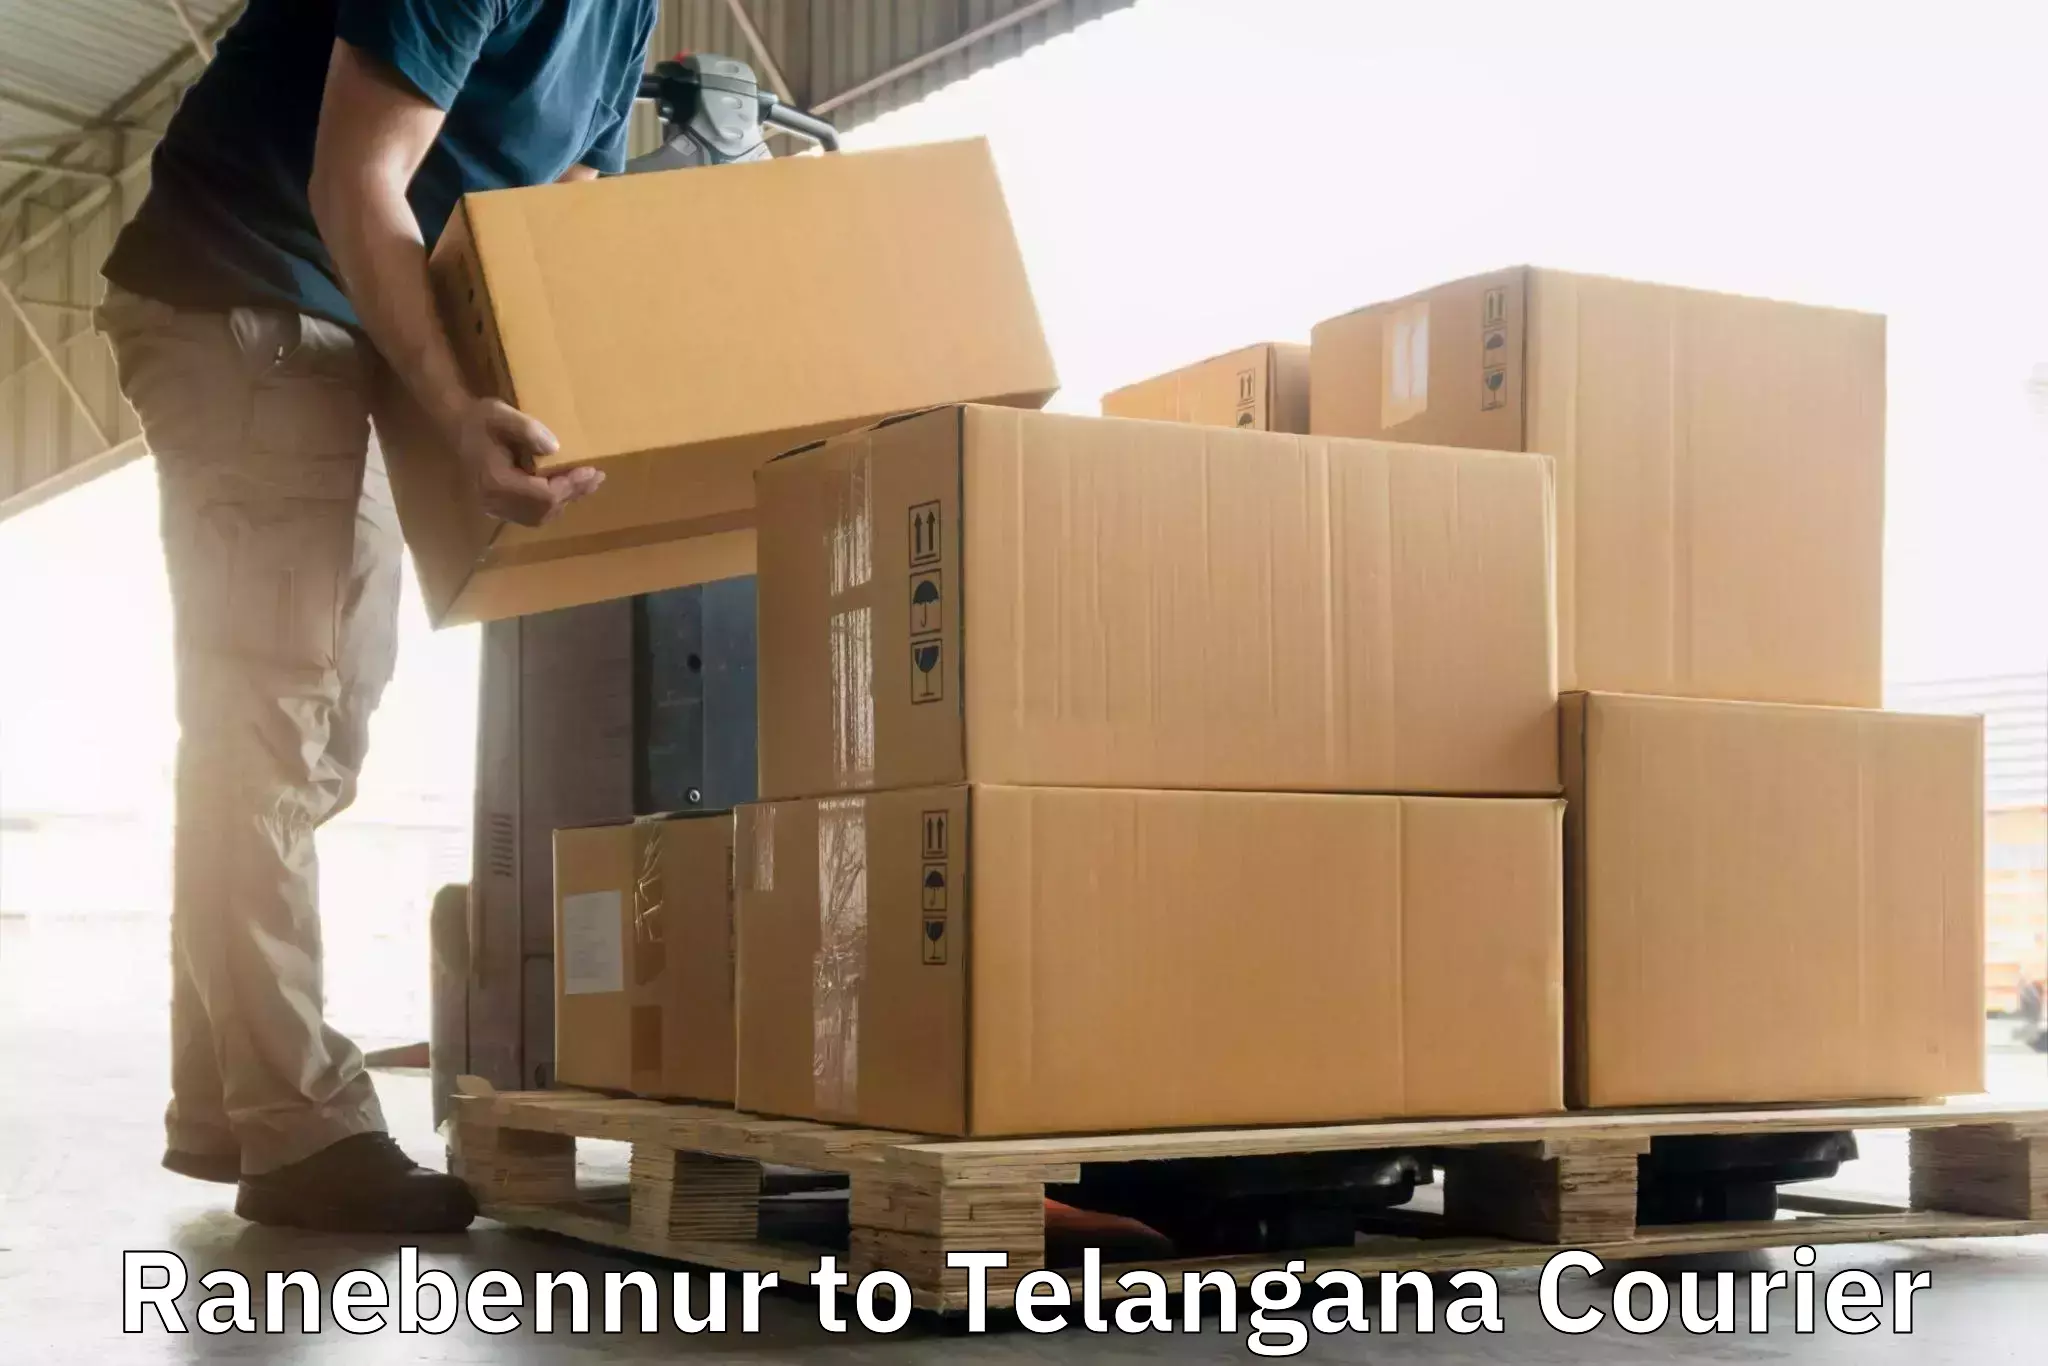 High-capacity parcel service Ranebennur to Telangana